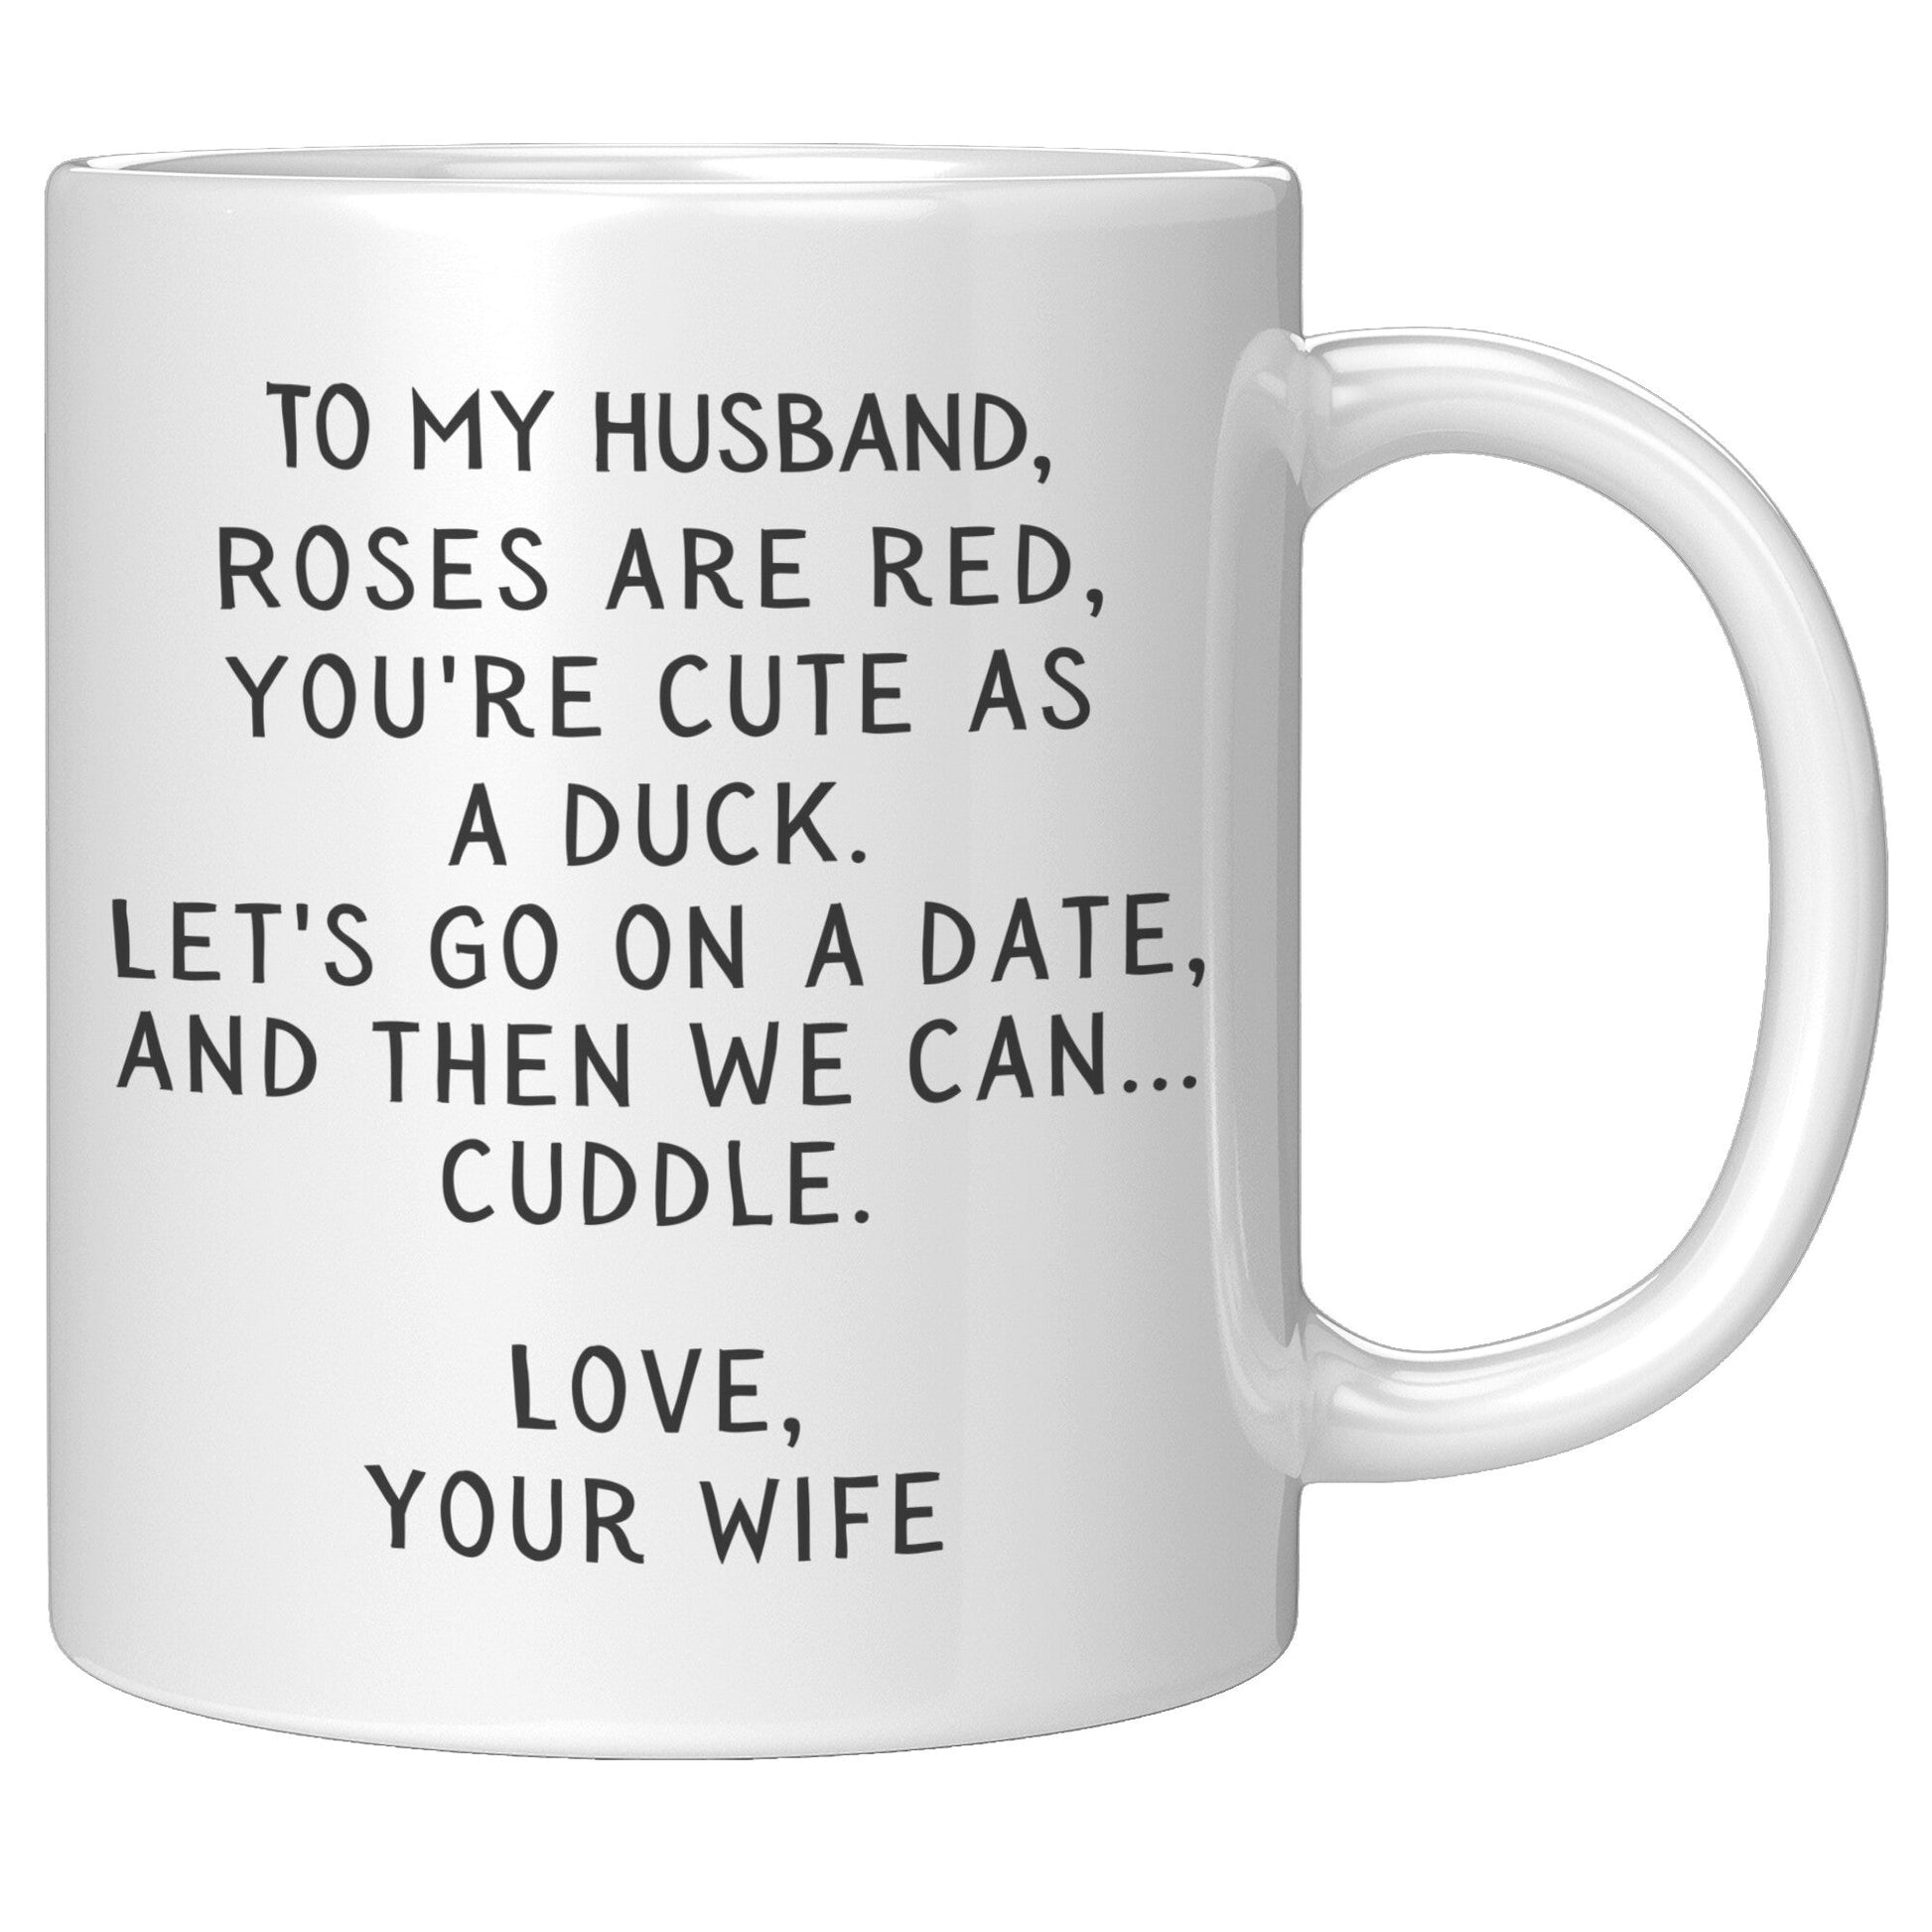 Funny Gift for Husband "Cute As A Duck" Mug Ceramic Mugs 